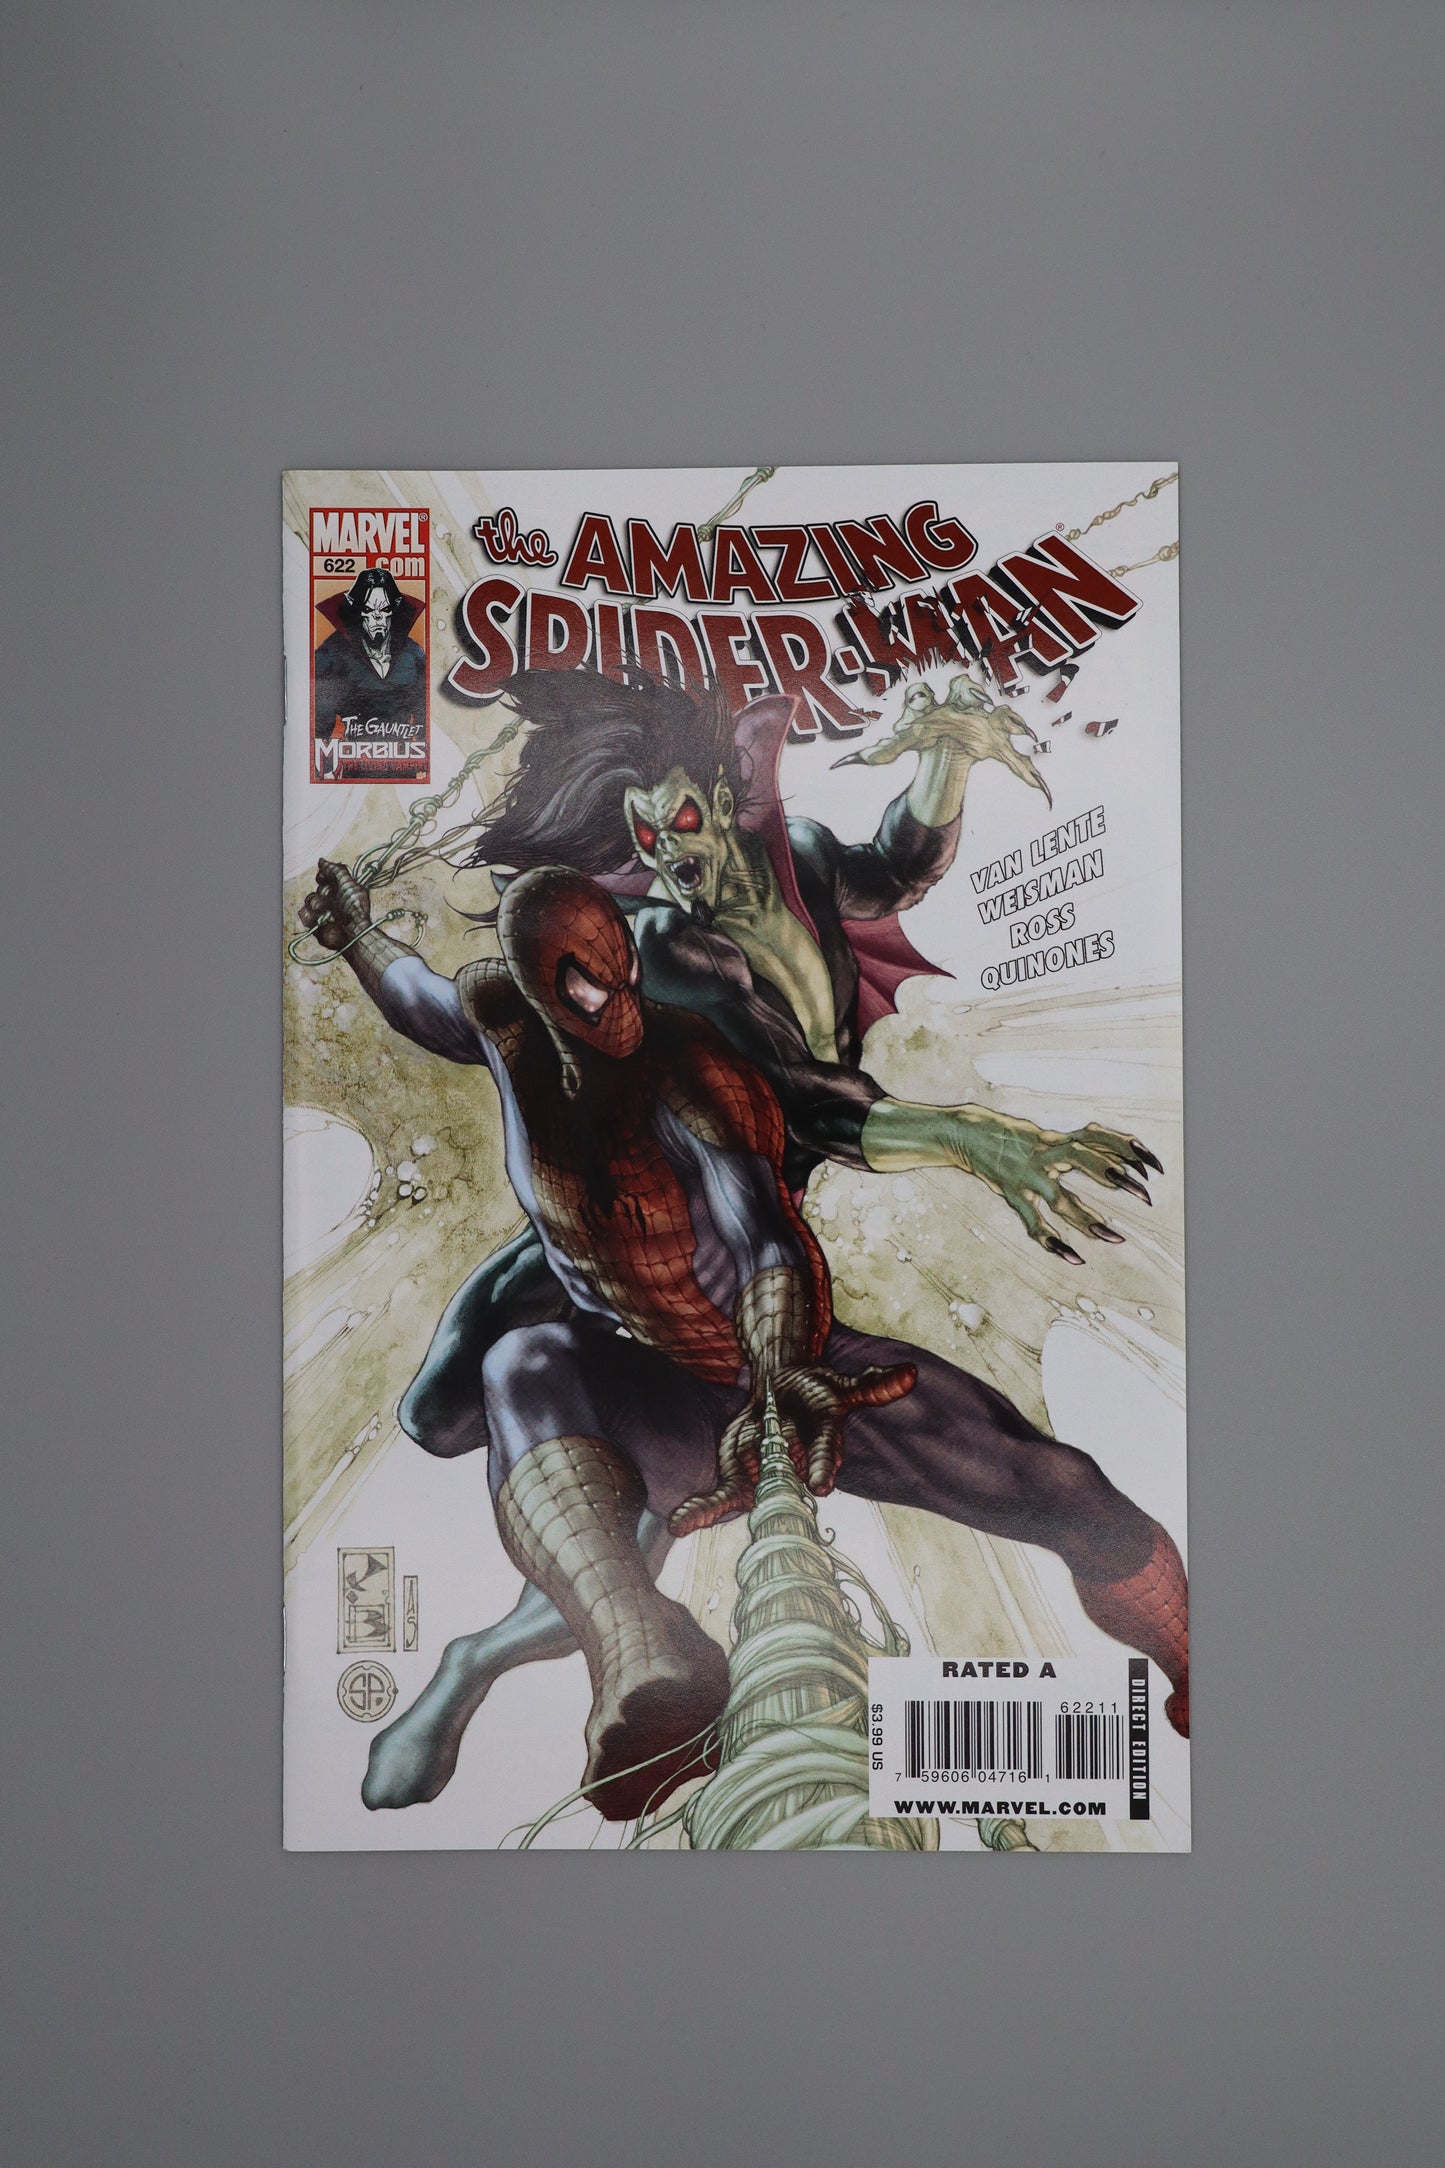 The Amazing Spider-man #622